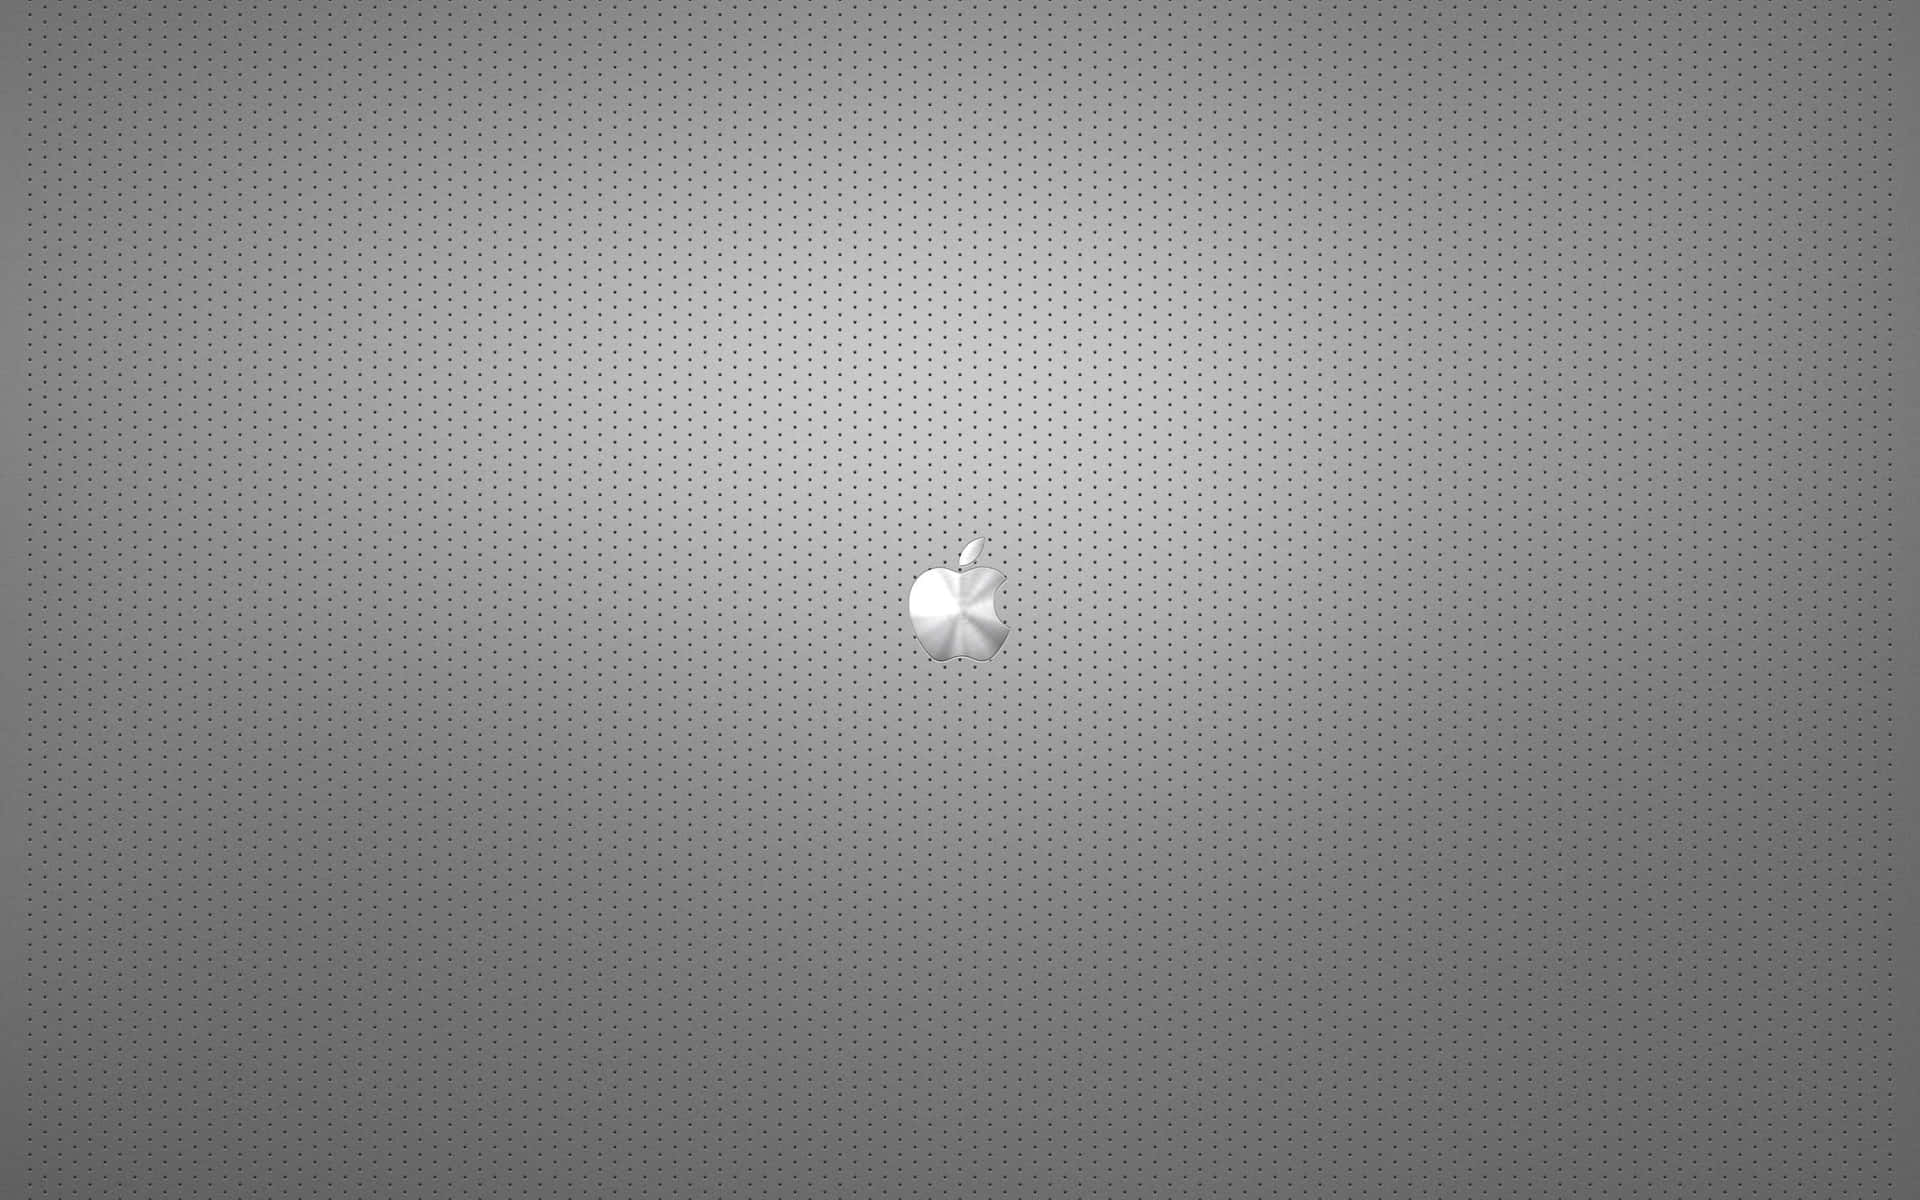 Papéisde Parede De Logotipo Da Apple Em Hd.